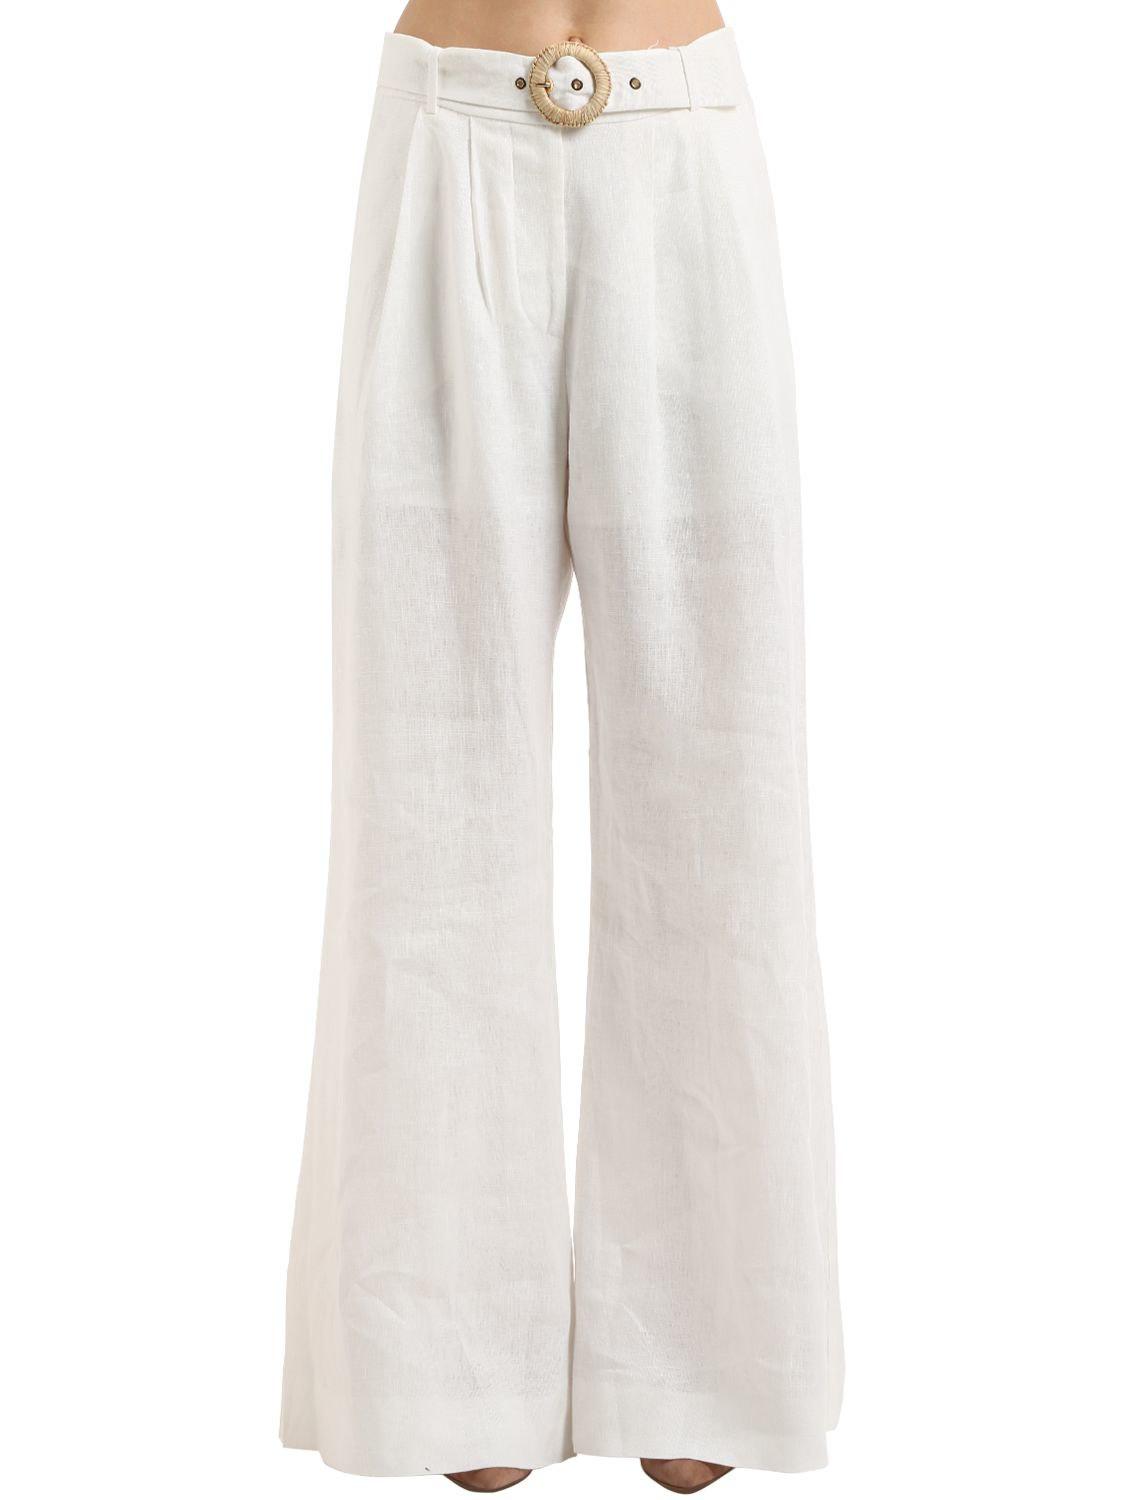 Zimmermann High Waist Wide Leg Linen Pants in White - Lyst